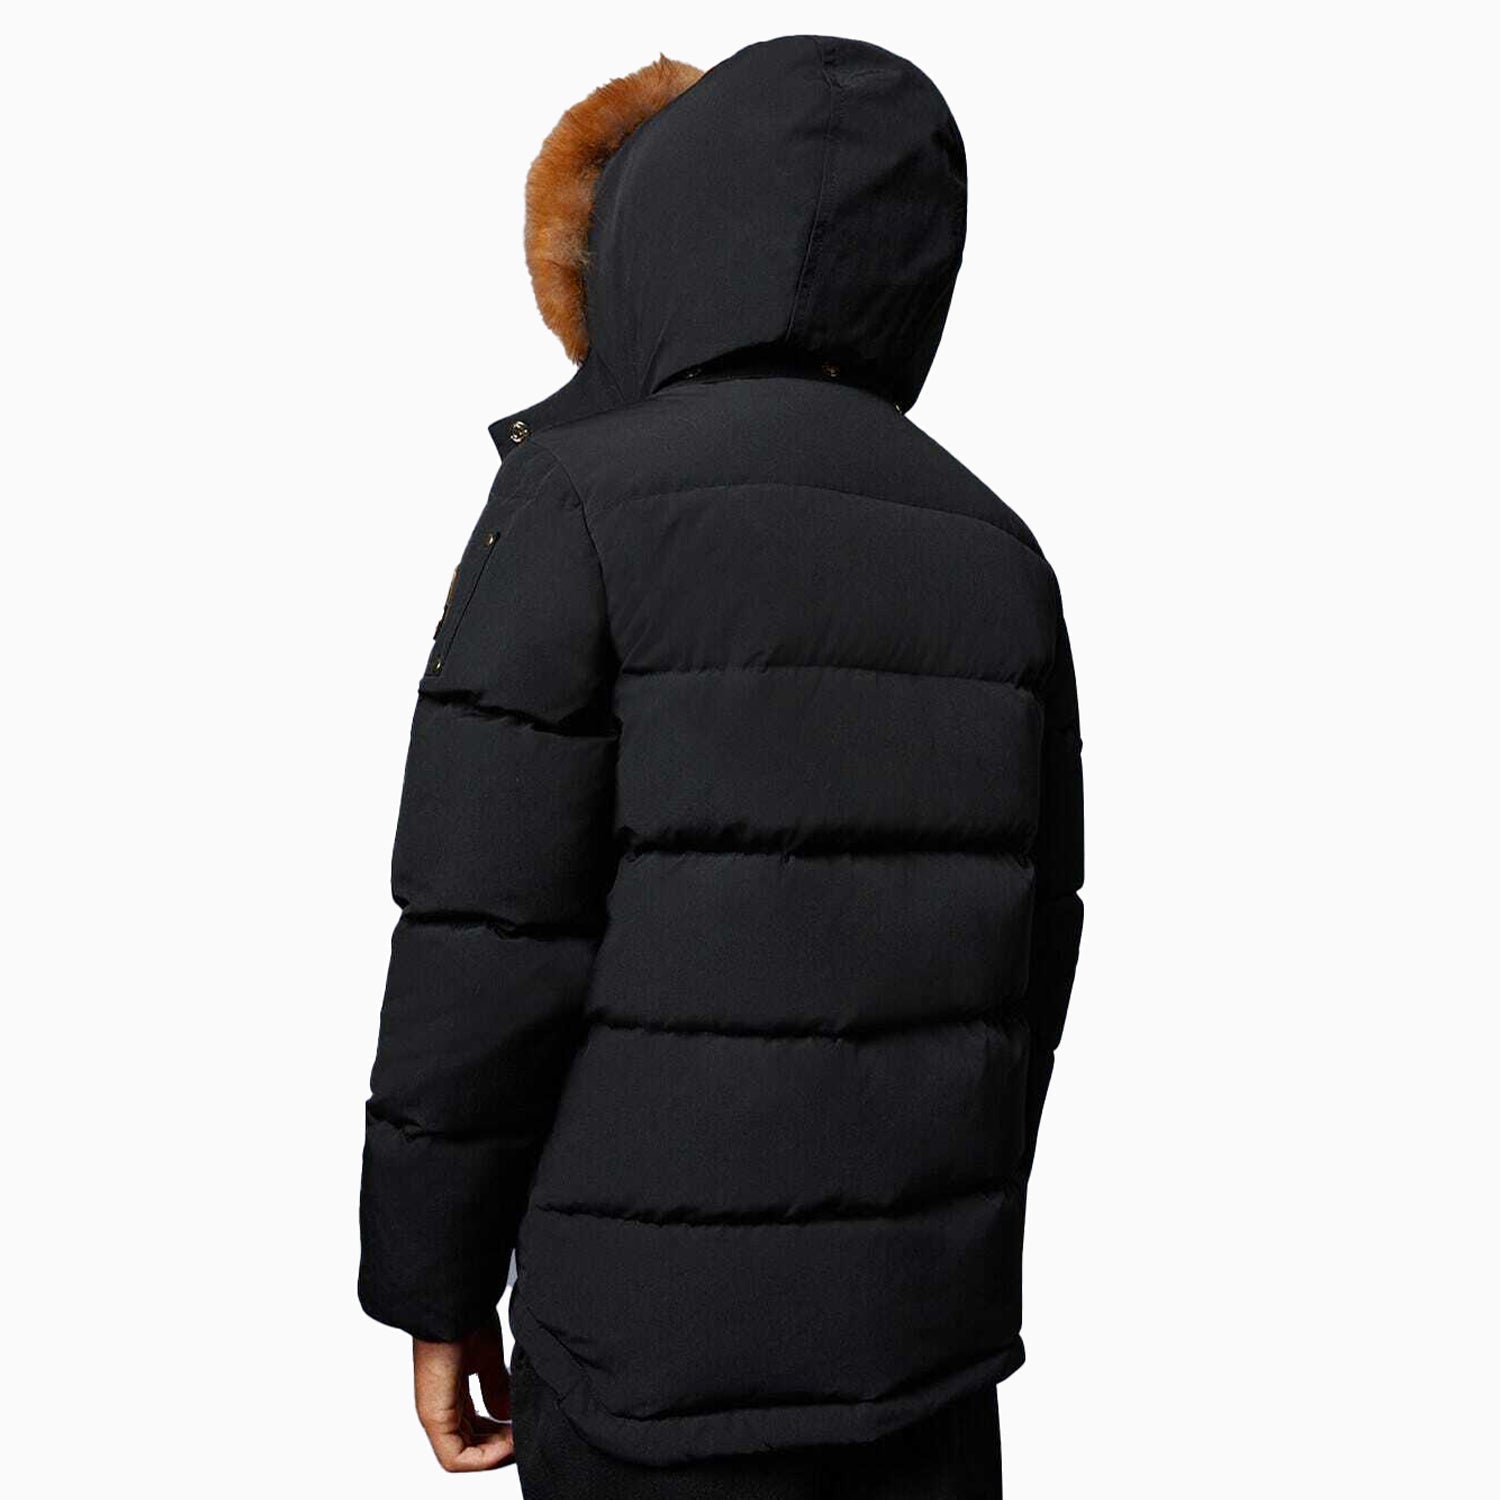 Moose Knuckles Kid's Unisex 3Q Jacket - Color: Black Gold - Kids Premium Clothing -